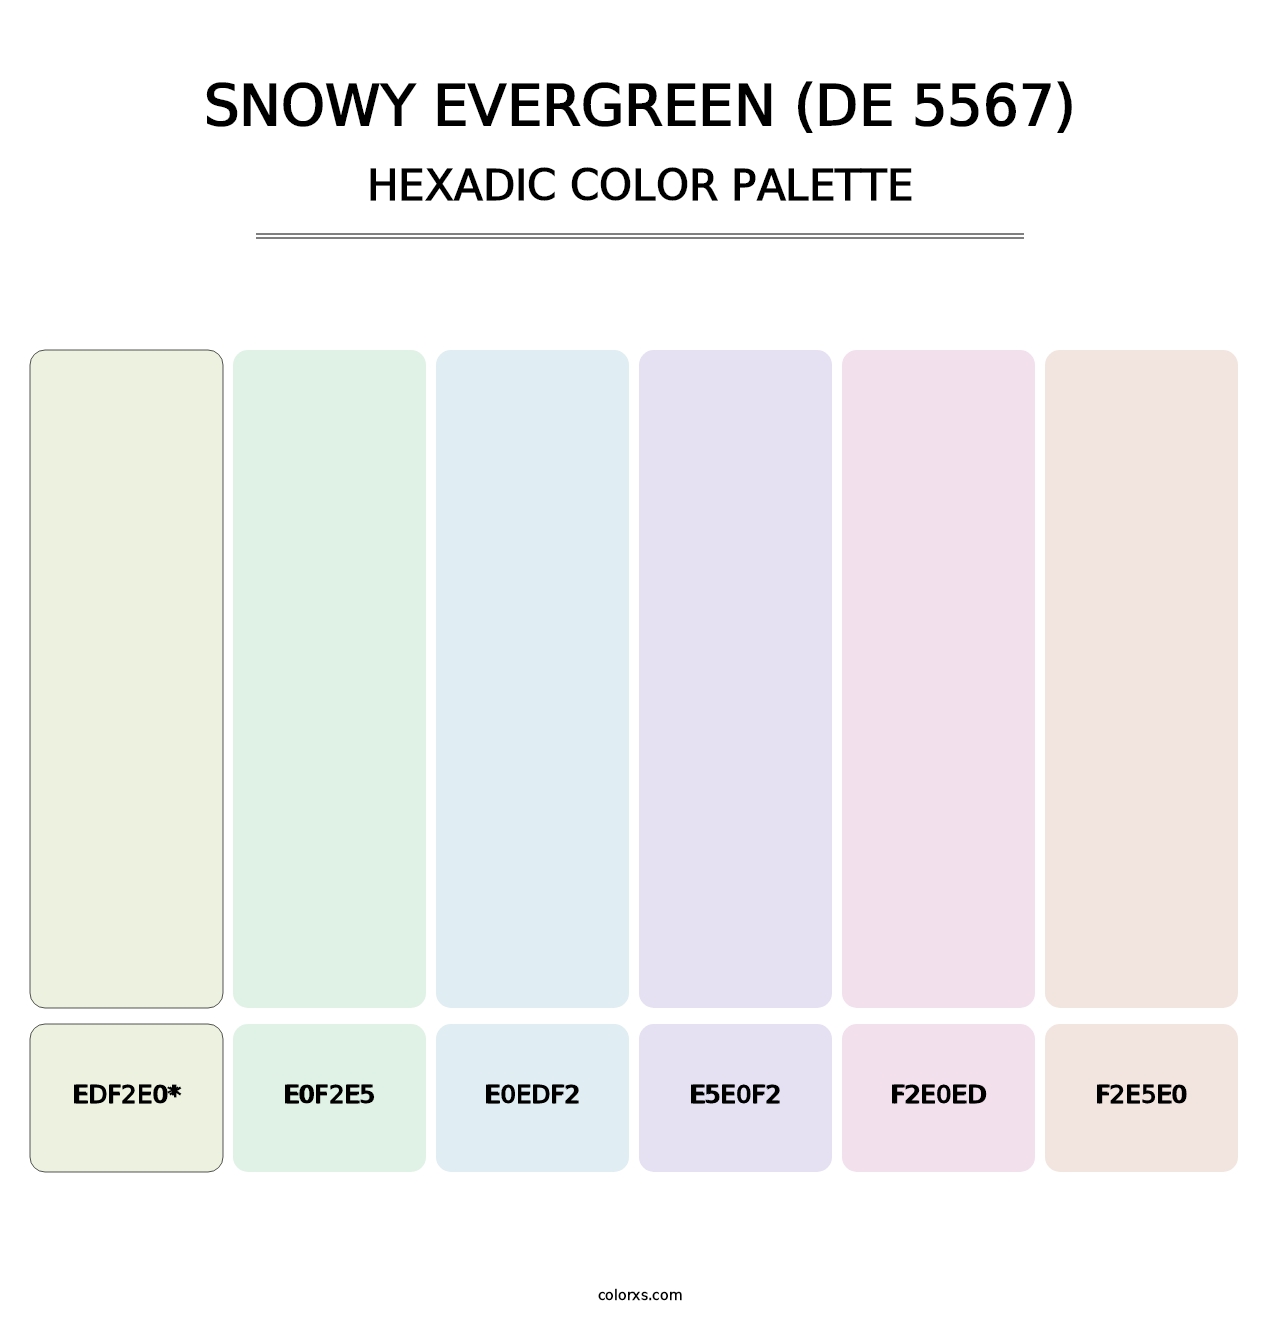 Snowy Evergreen (DE 5567) - Hexadic Color Palette